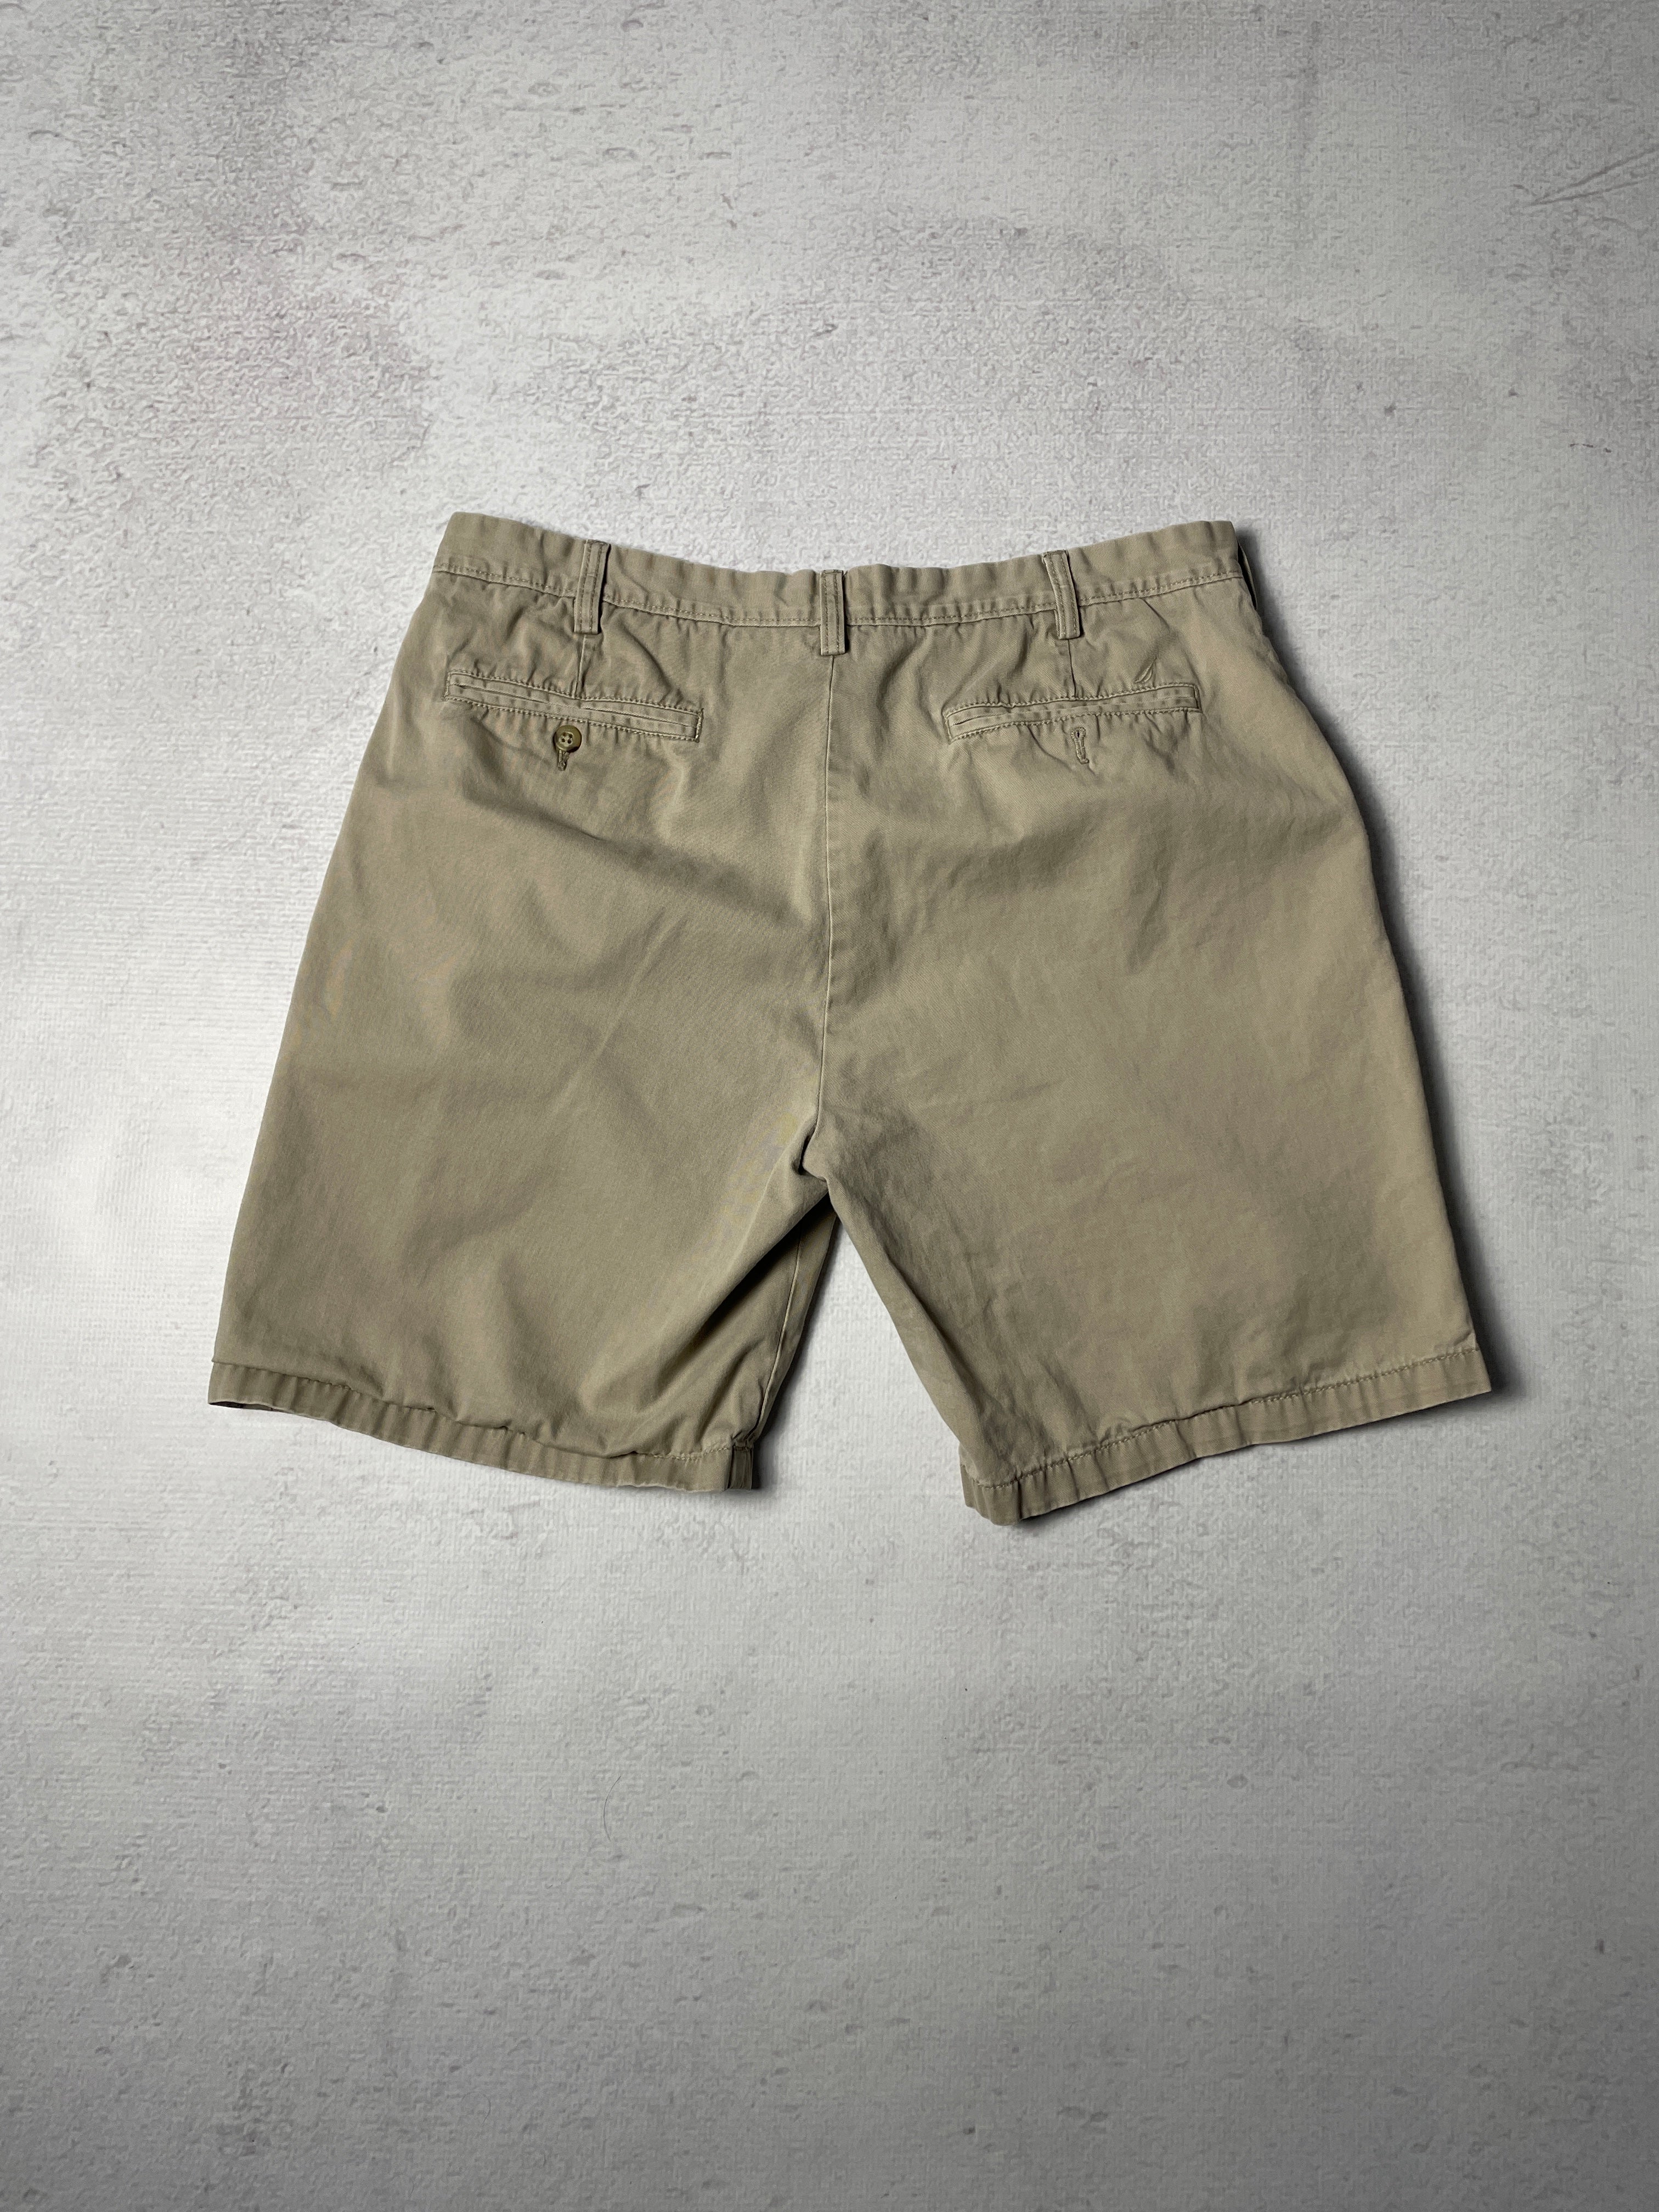 Vintage Nautica Chino Shorts - Men's 38W